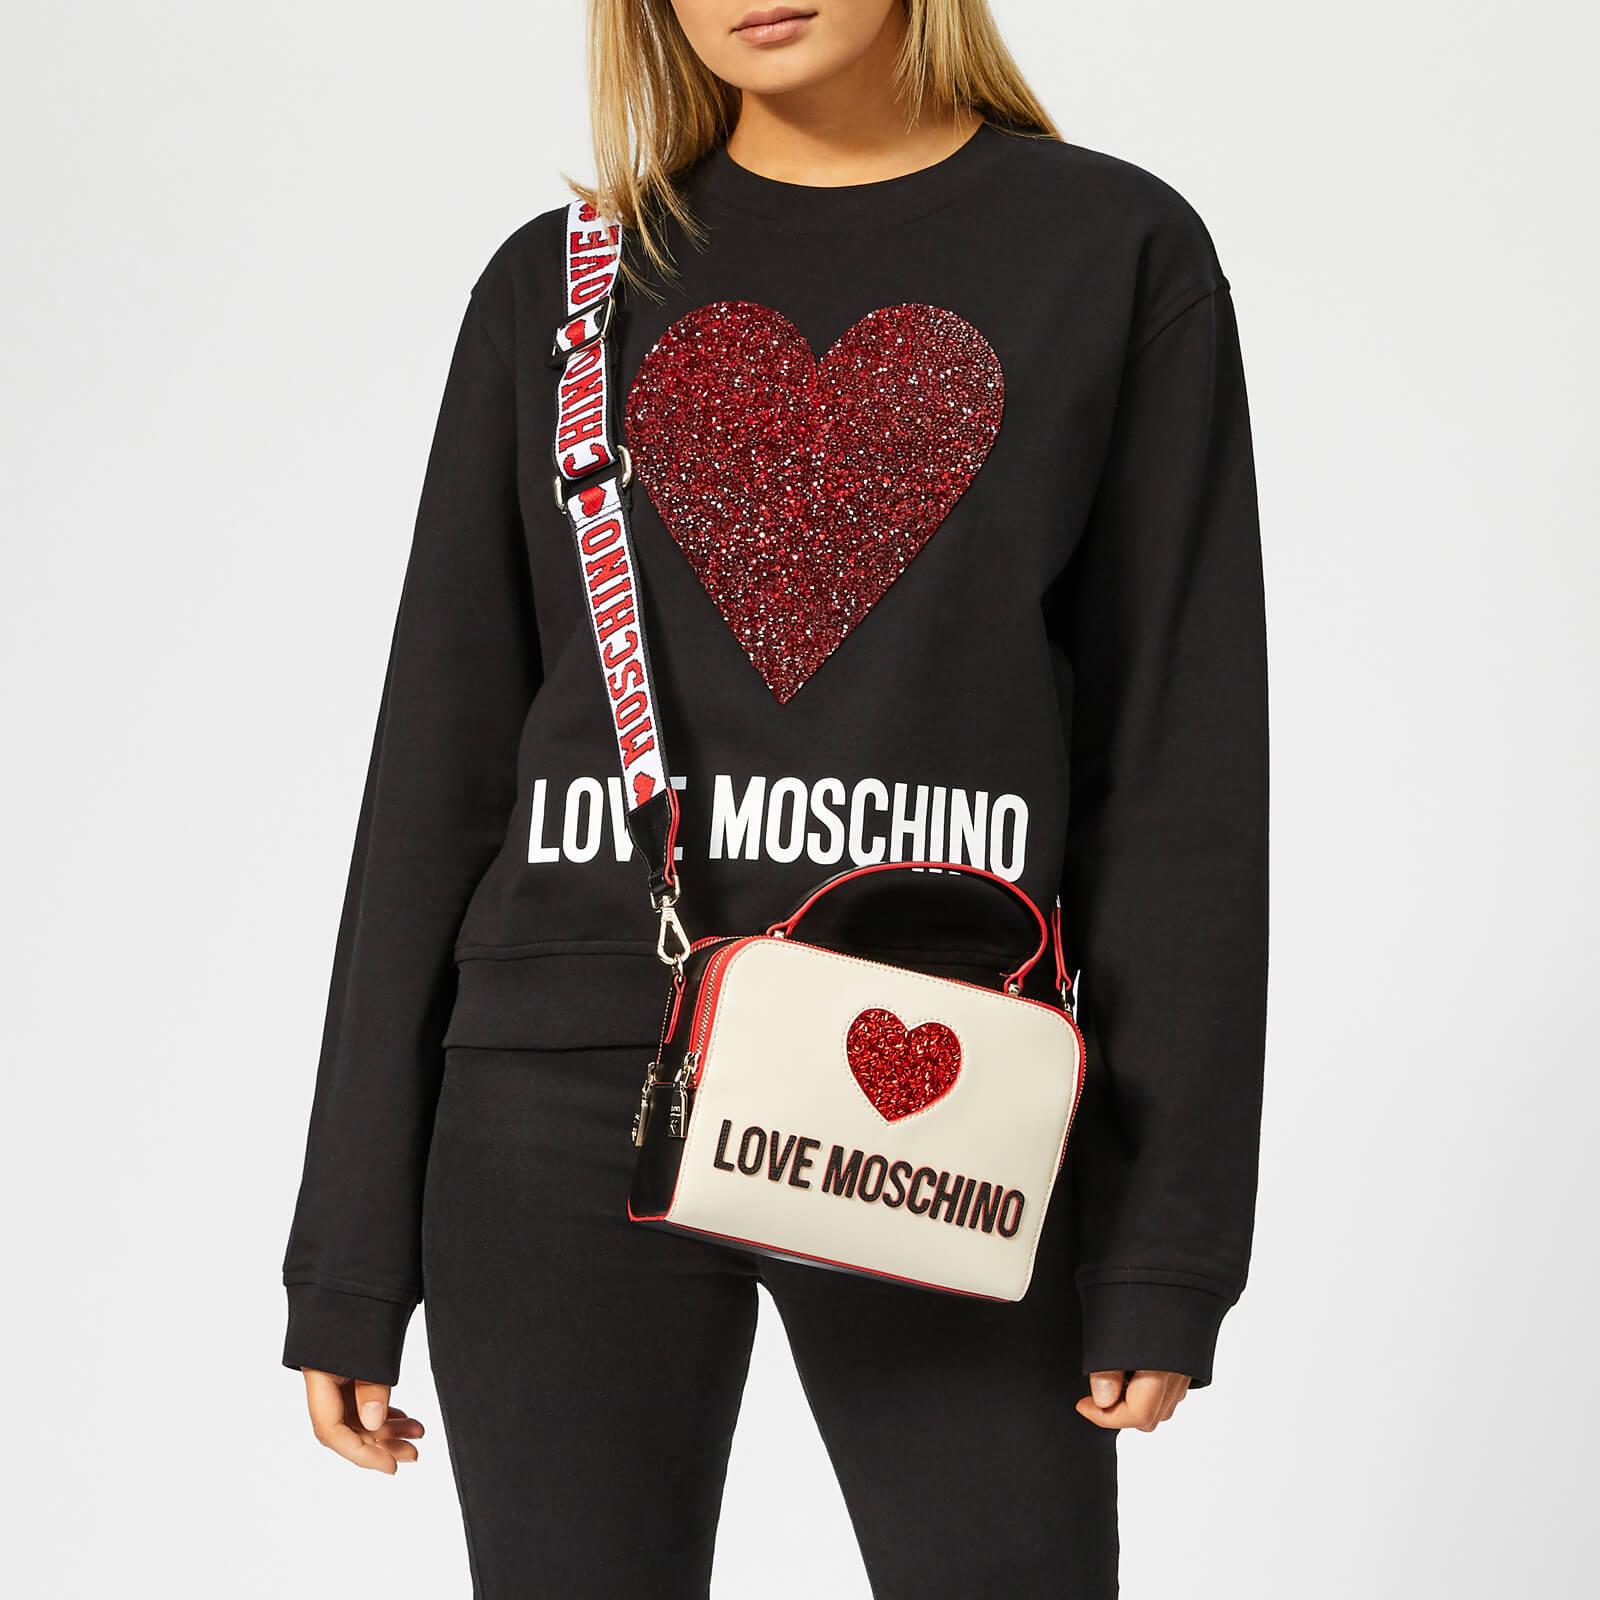 love moschino sequin bag